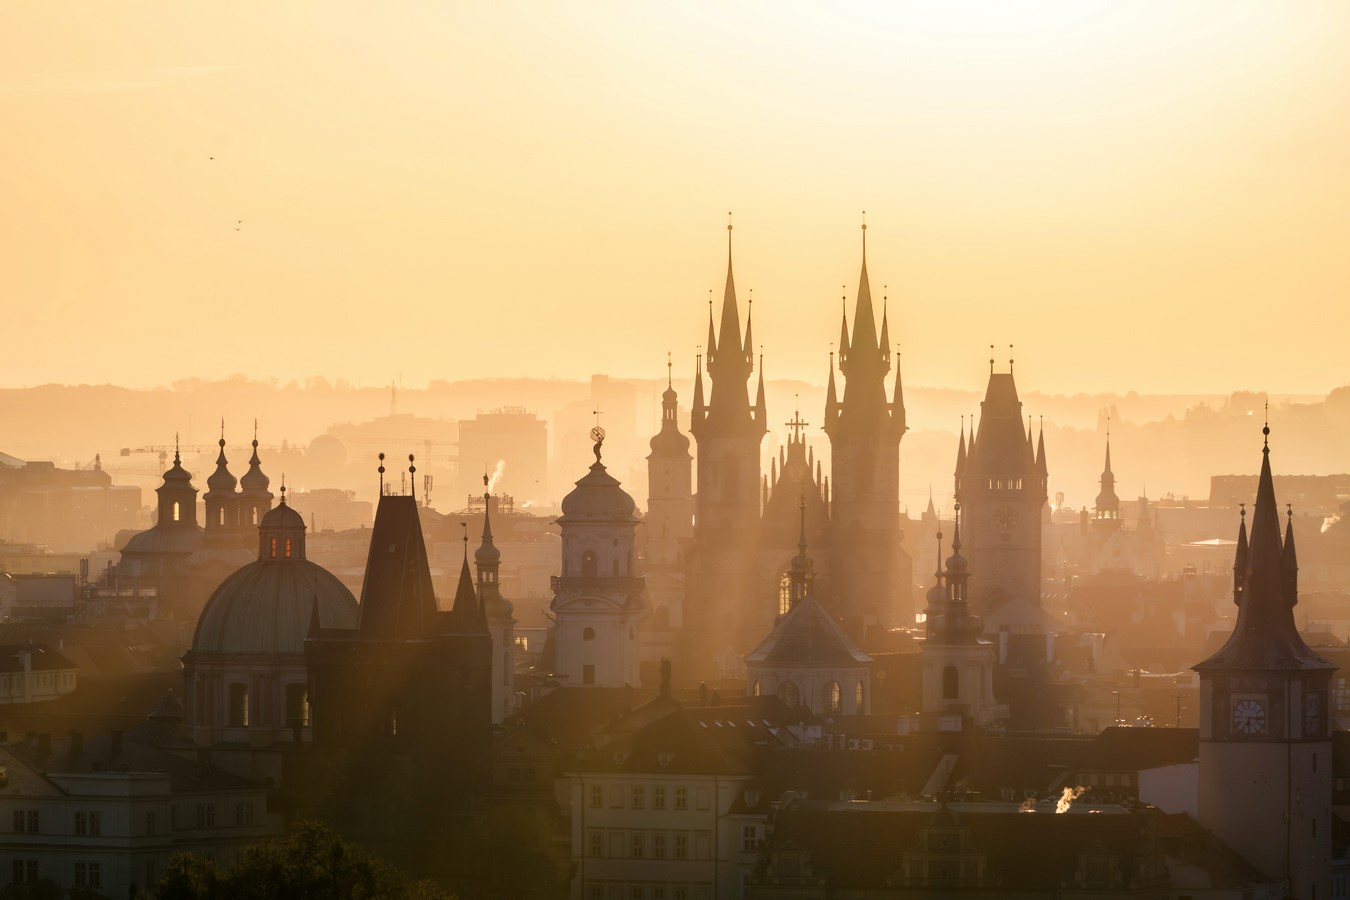 Prague’s pride – The skyline of the city - Sheet2